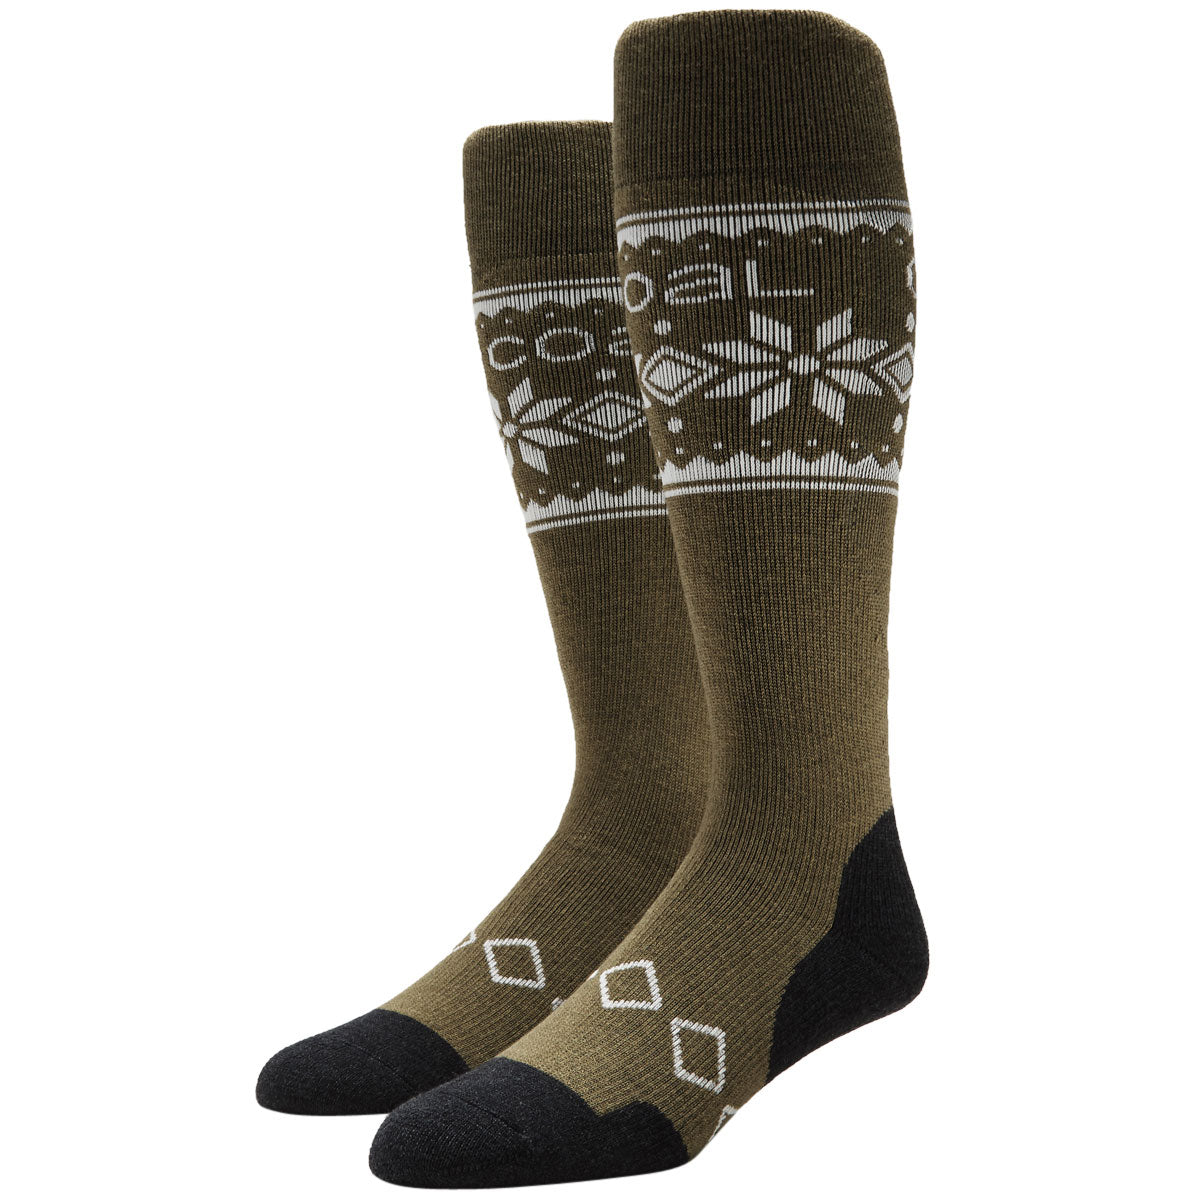 Coal Midweight Snowboard Socks - Sage image 1